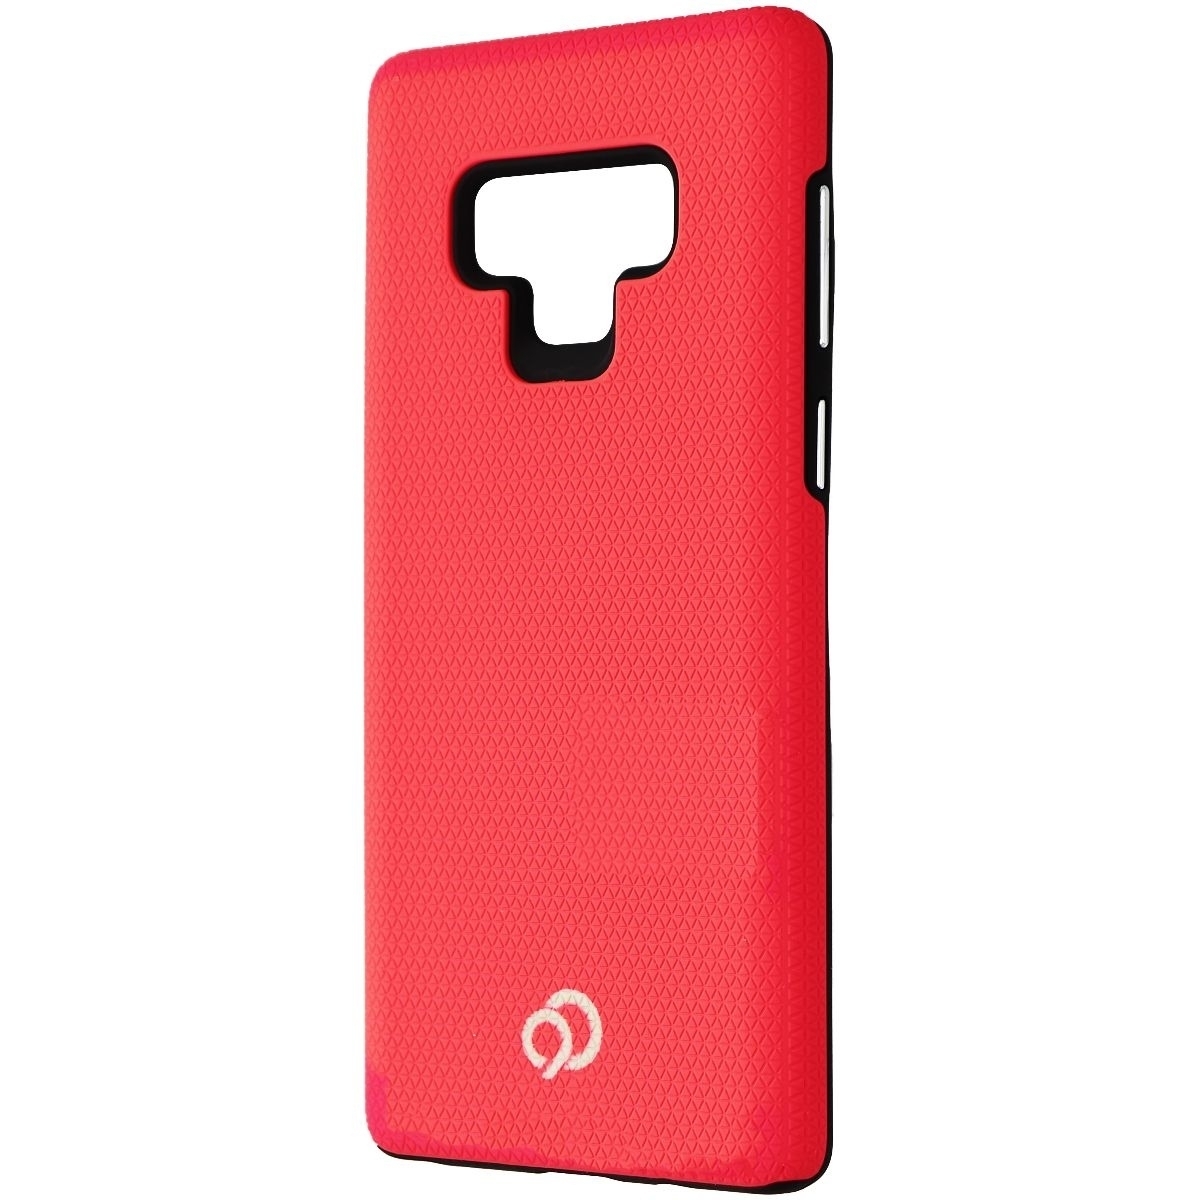 Nimbus9 Latitude Series Case For Samsung Galaxy Note9 - Neon Pink